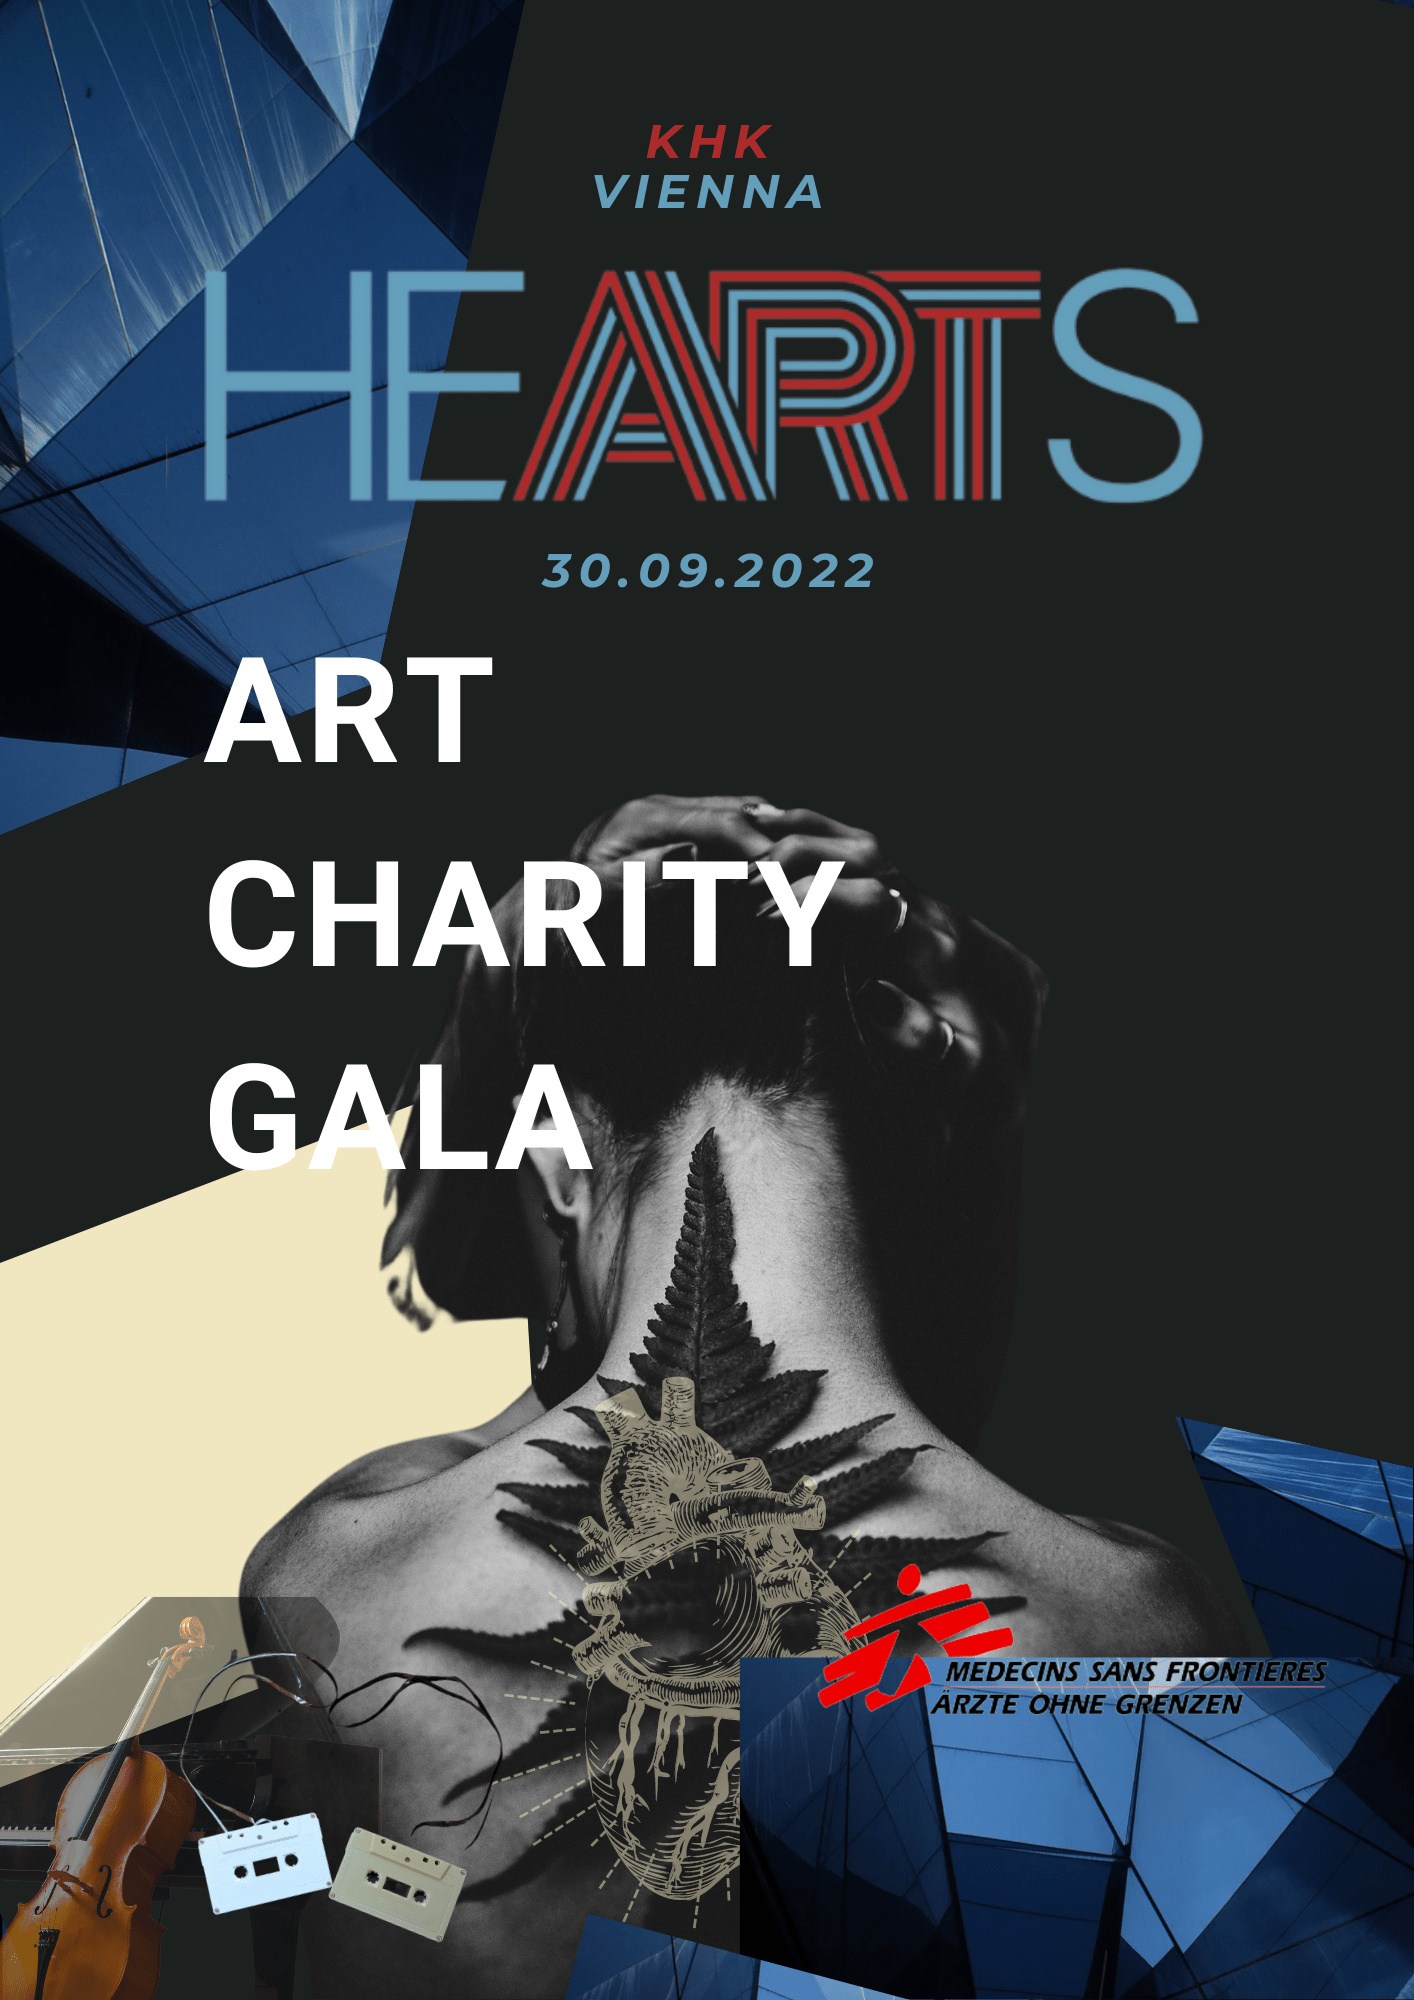 HEARTS Art Charity Gala 2022 LOGO